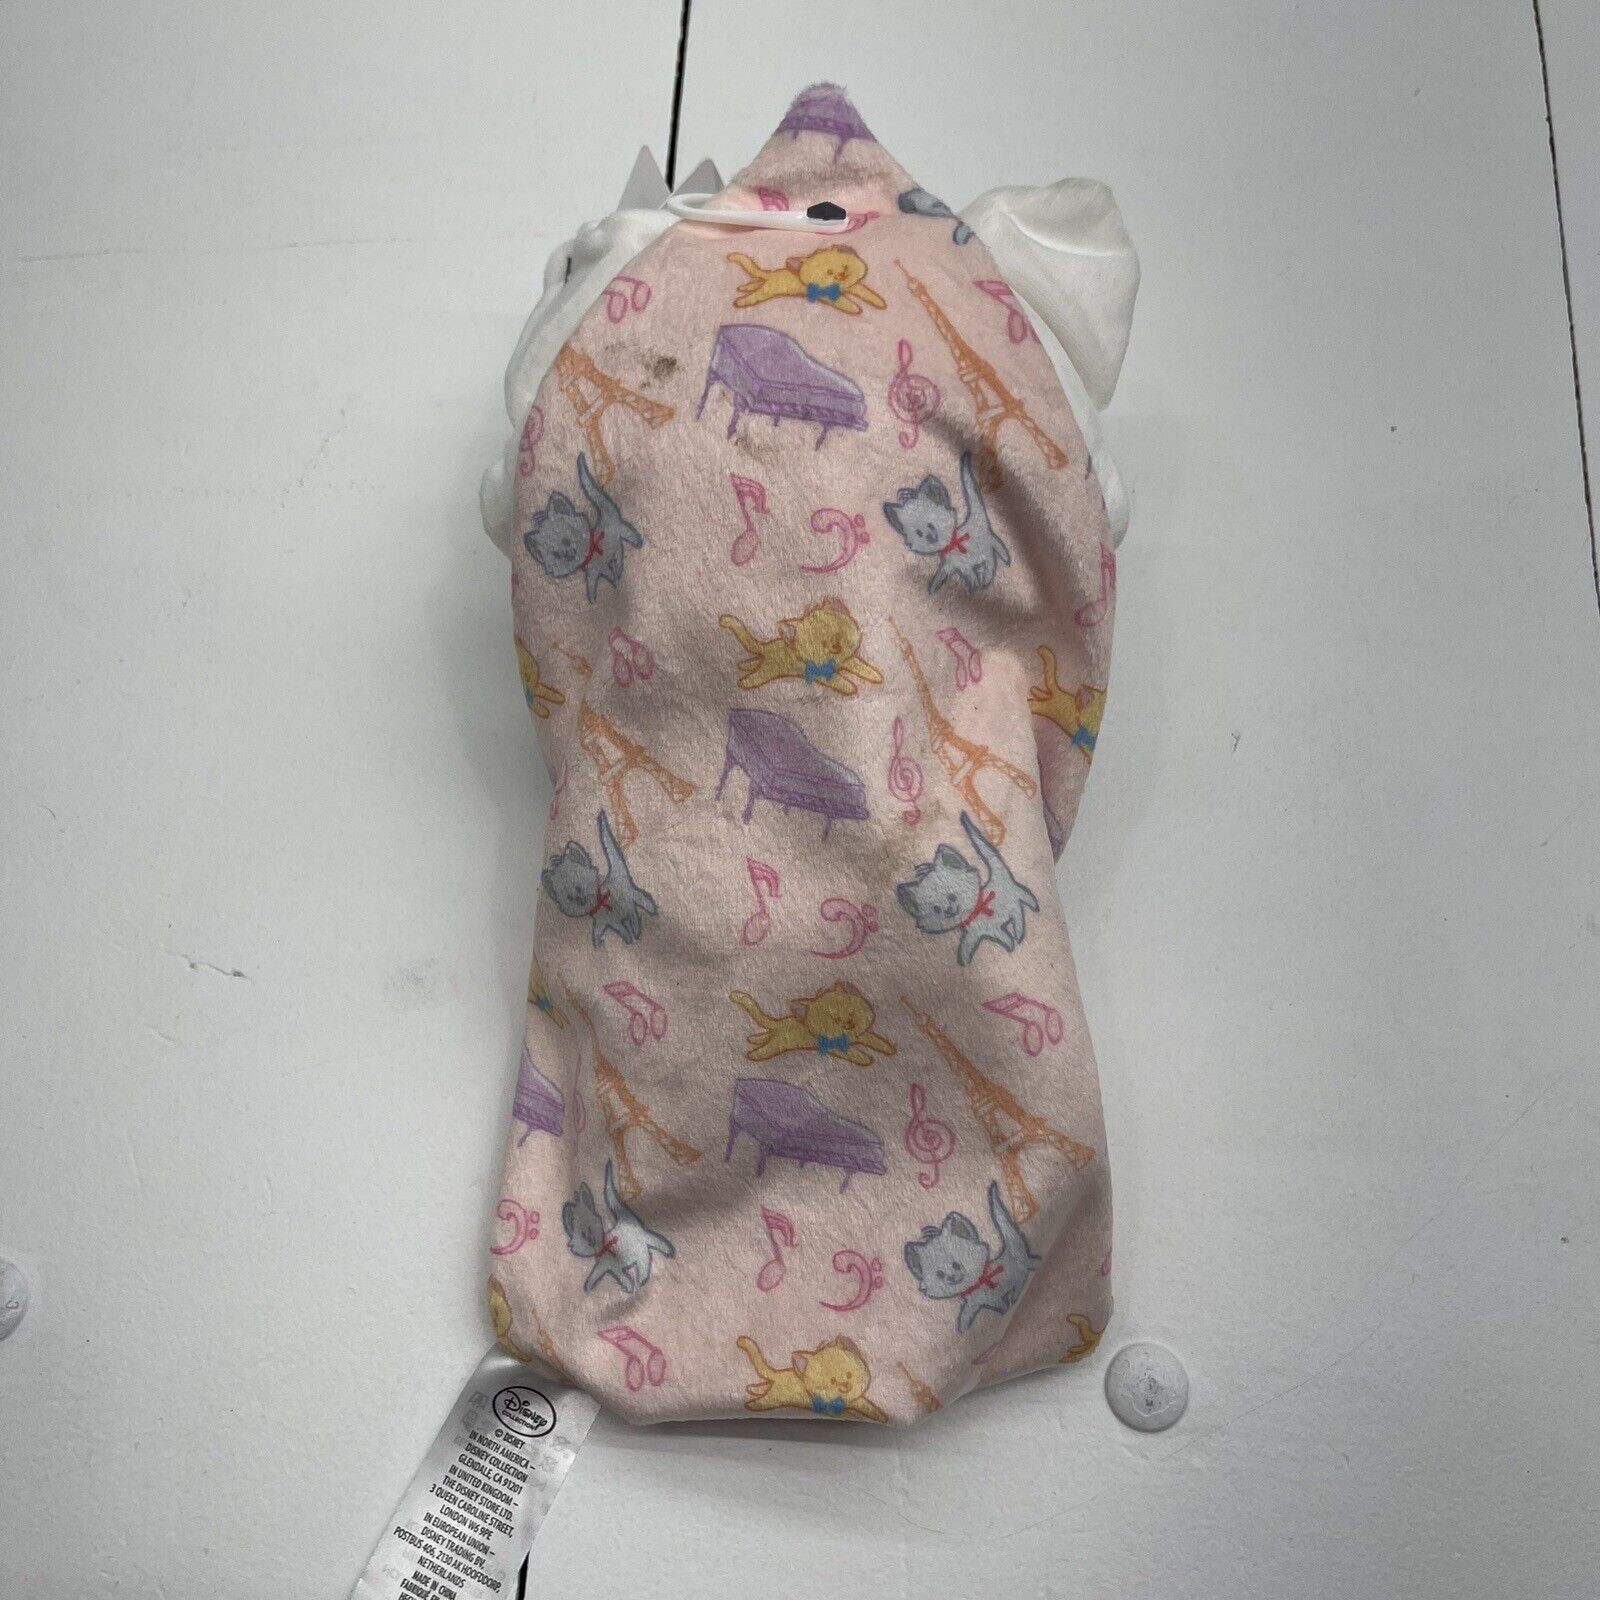 Disney Aristocats Marie Baby Plush Stuffed Animal New Defects - beyond  exchange